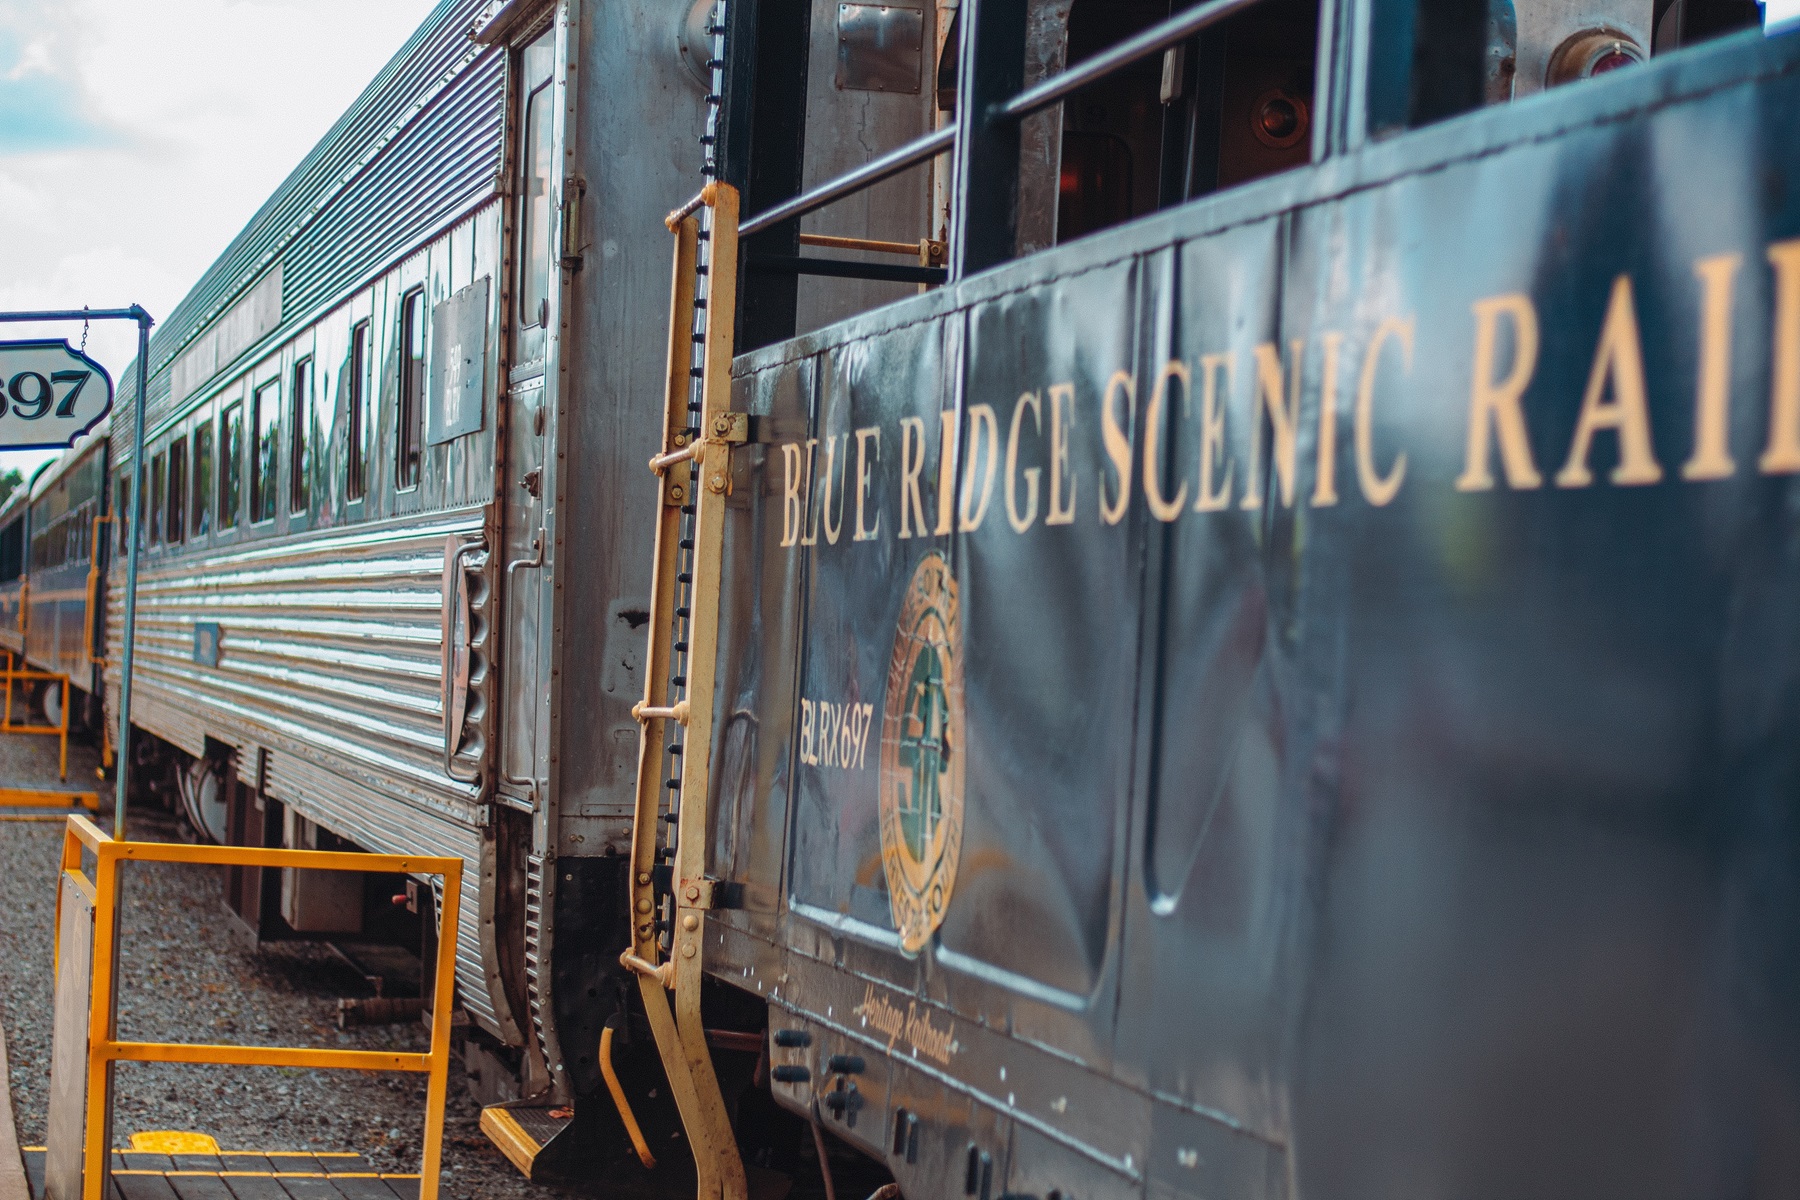 Blue Ridge Scenic Railway, Georgia